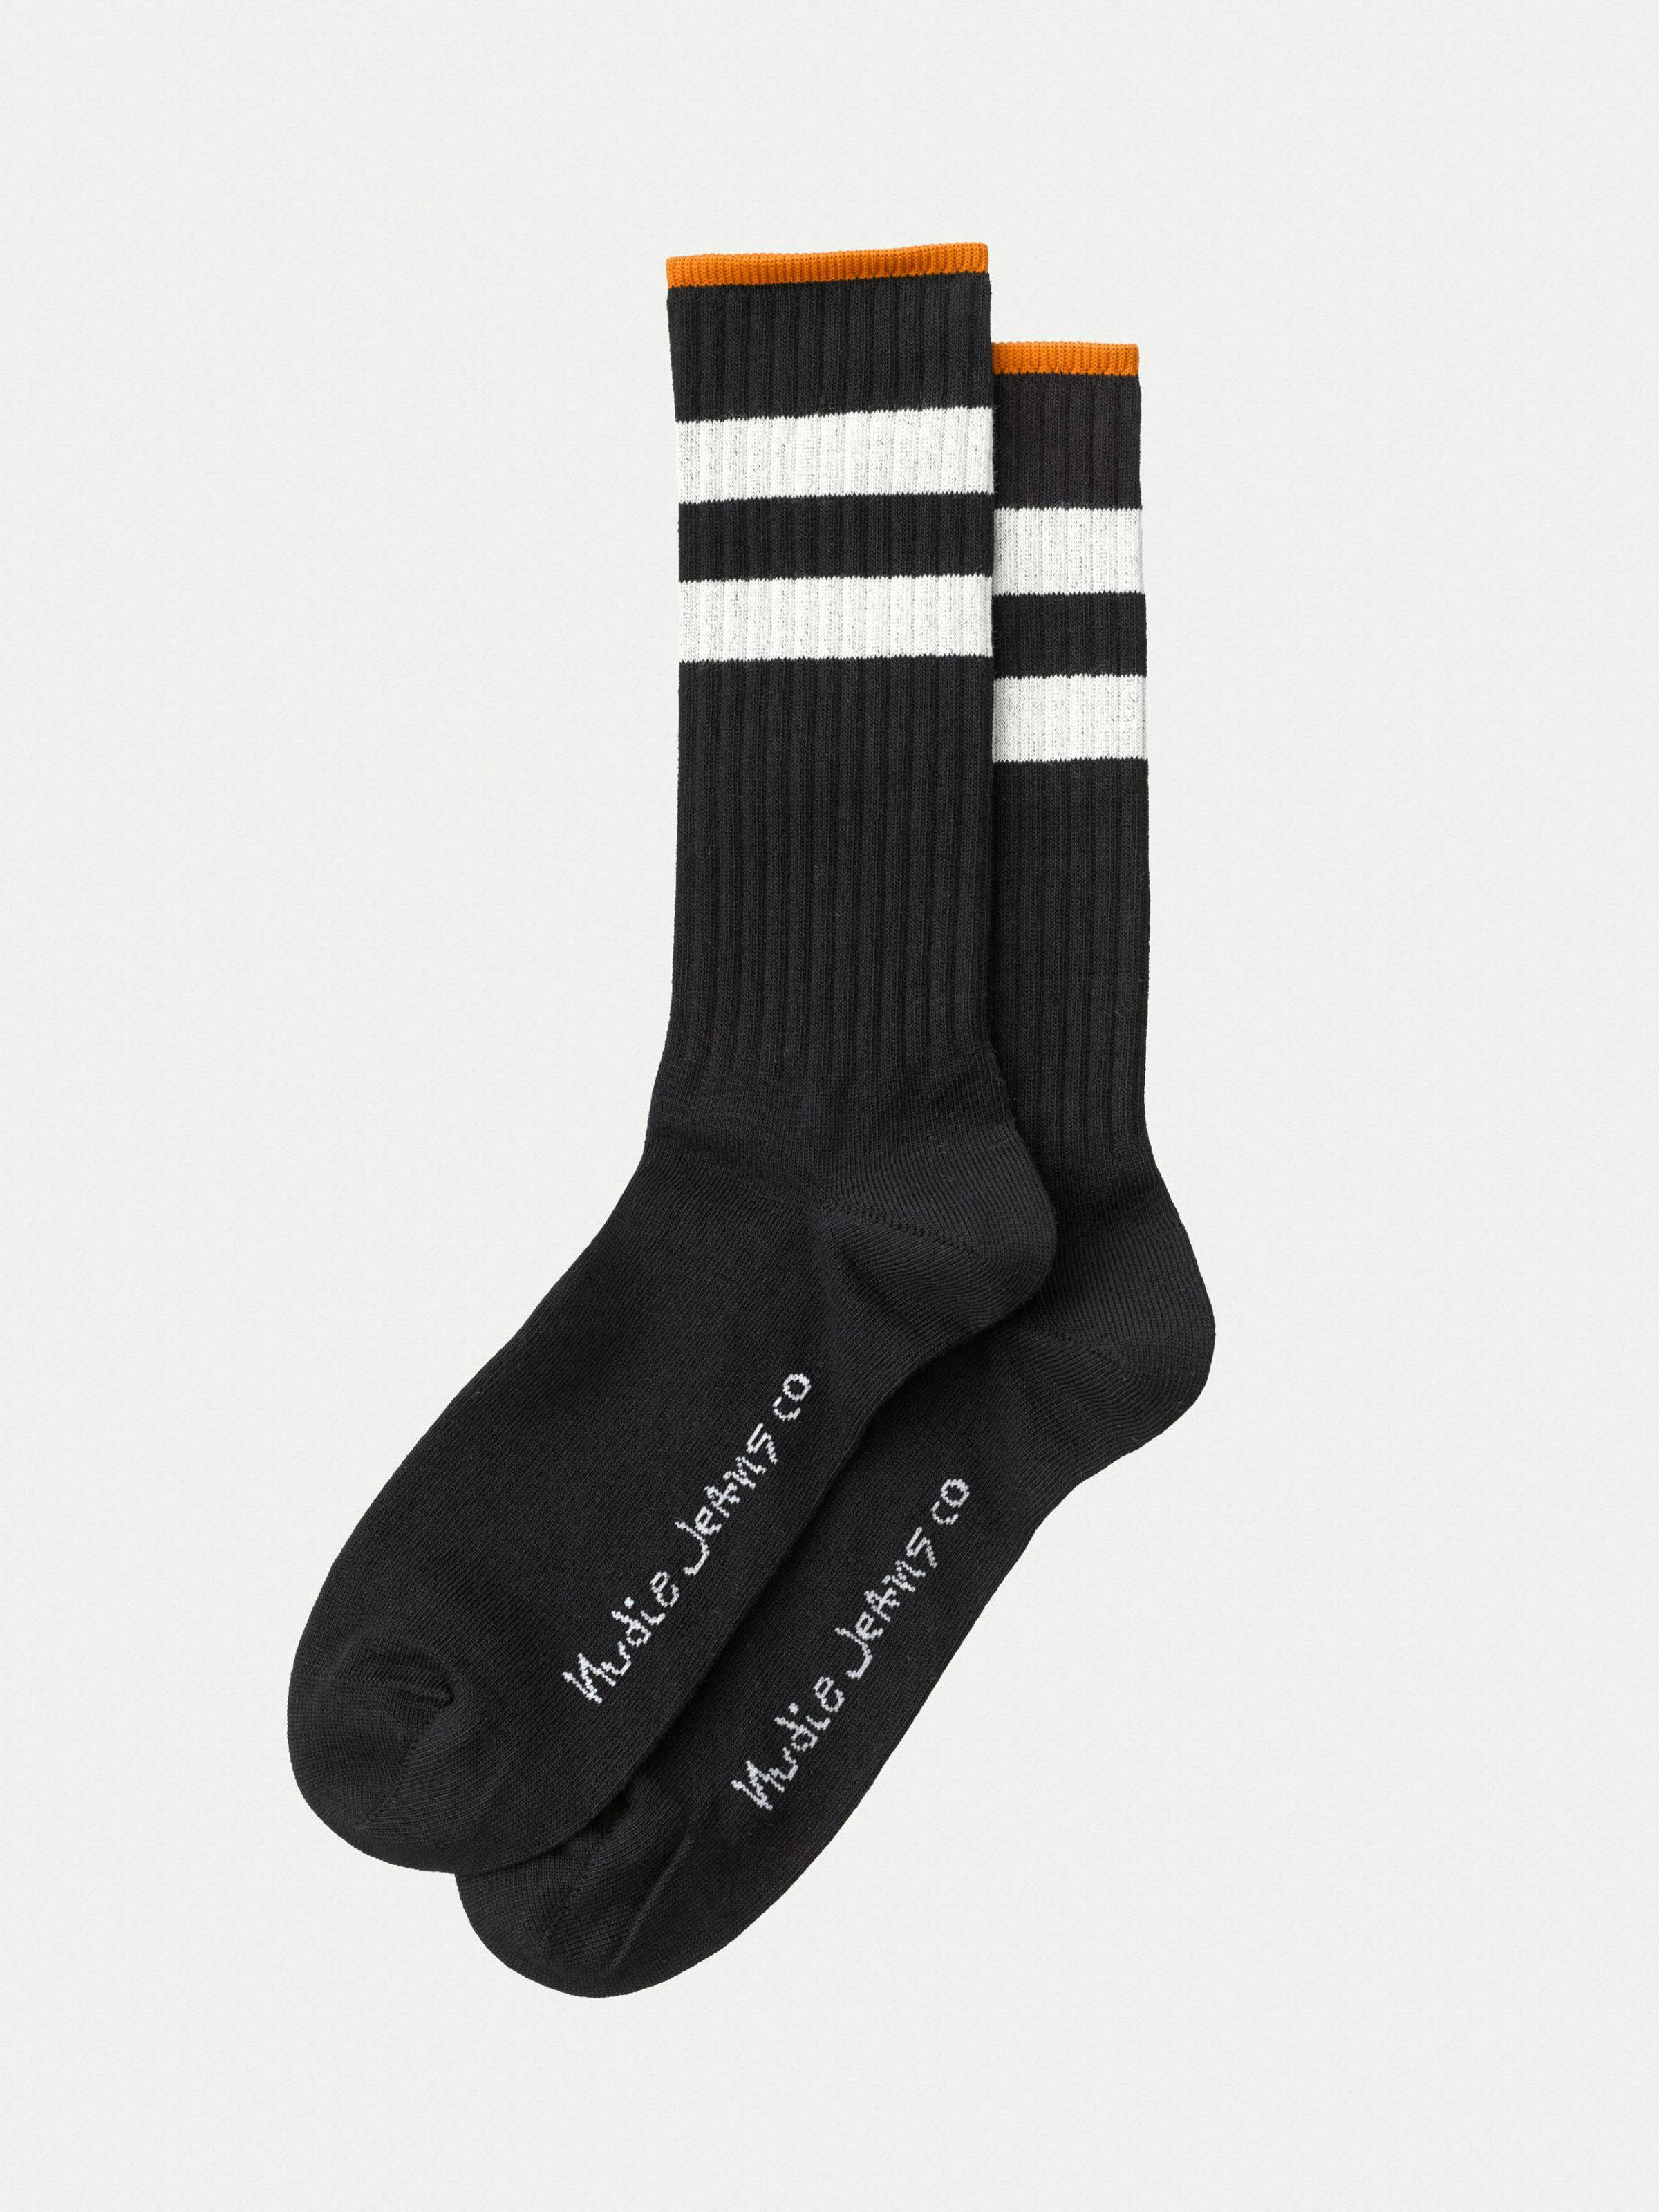 Amundsson Sport Socks Black/White